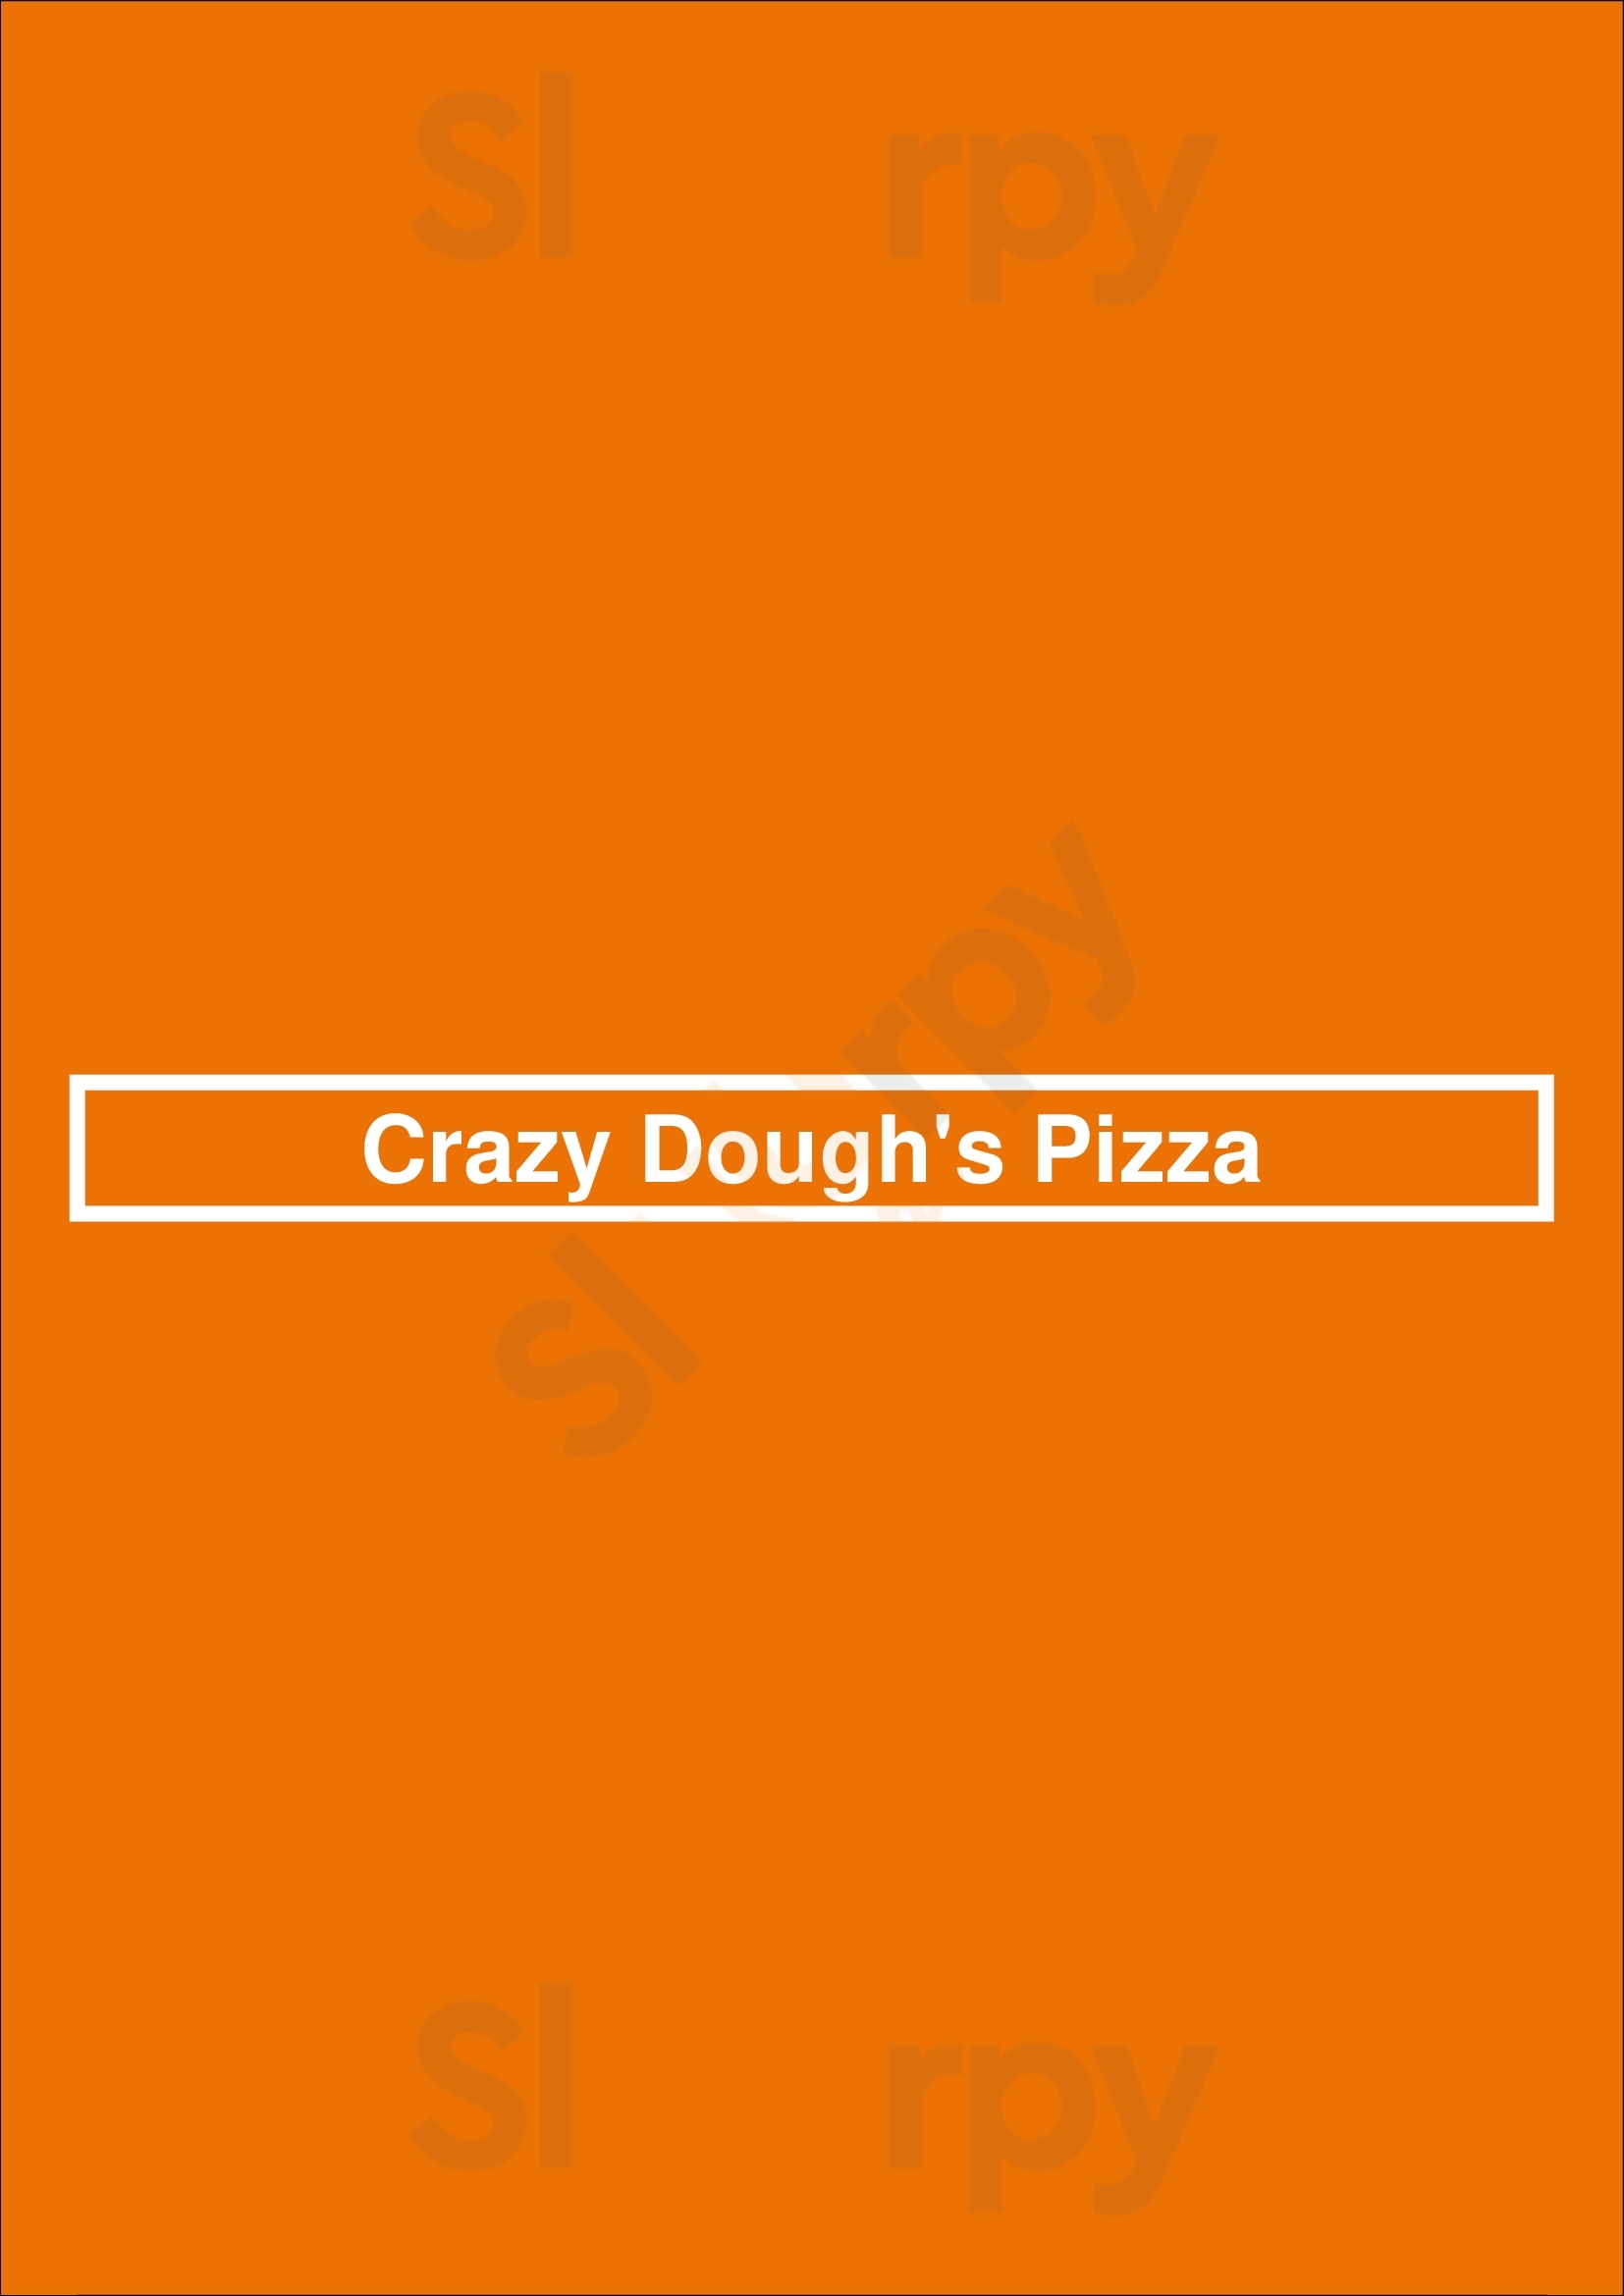 Crazy Dough's Pizza Boston Menu - 1